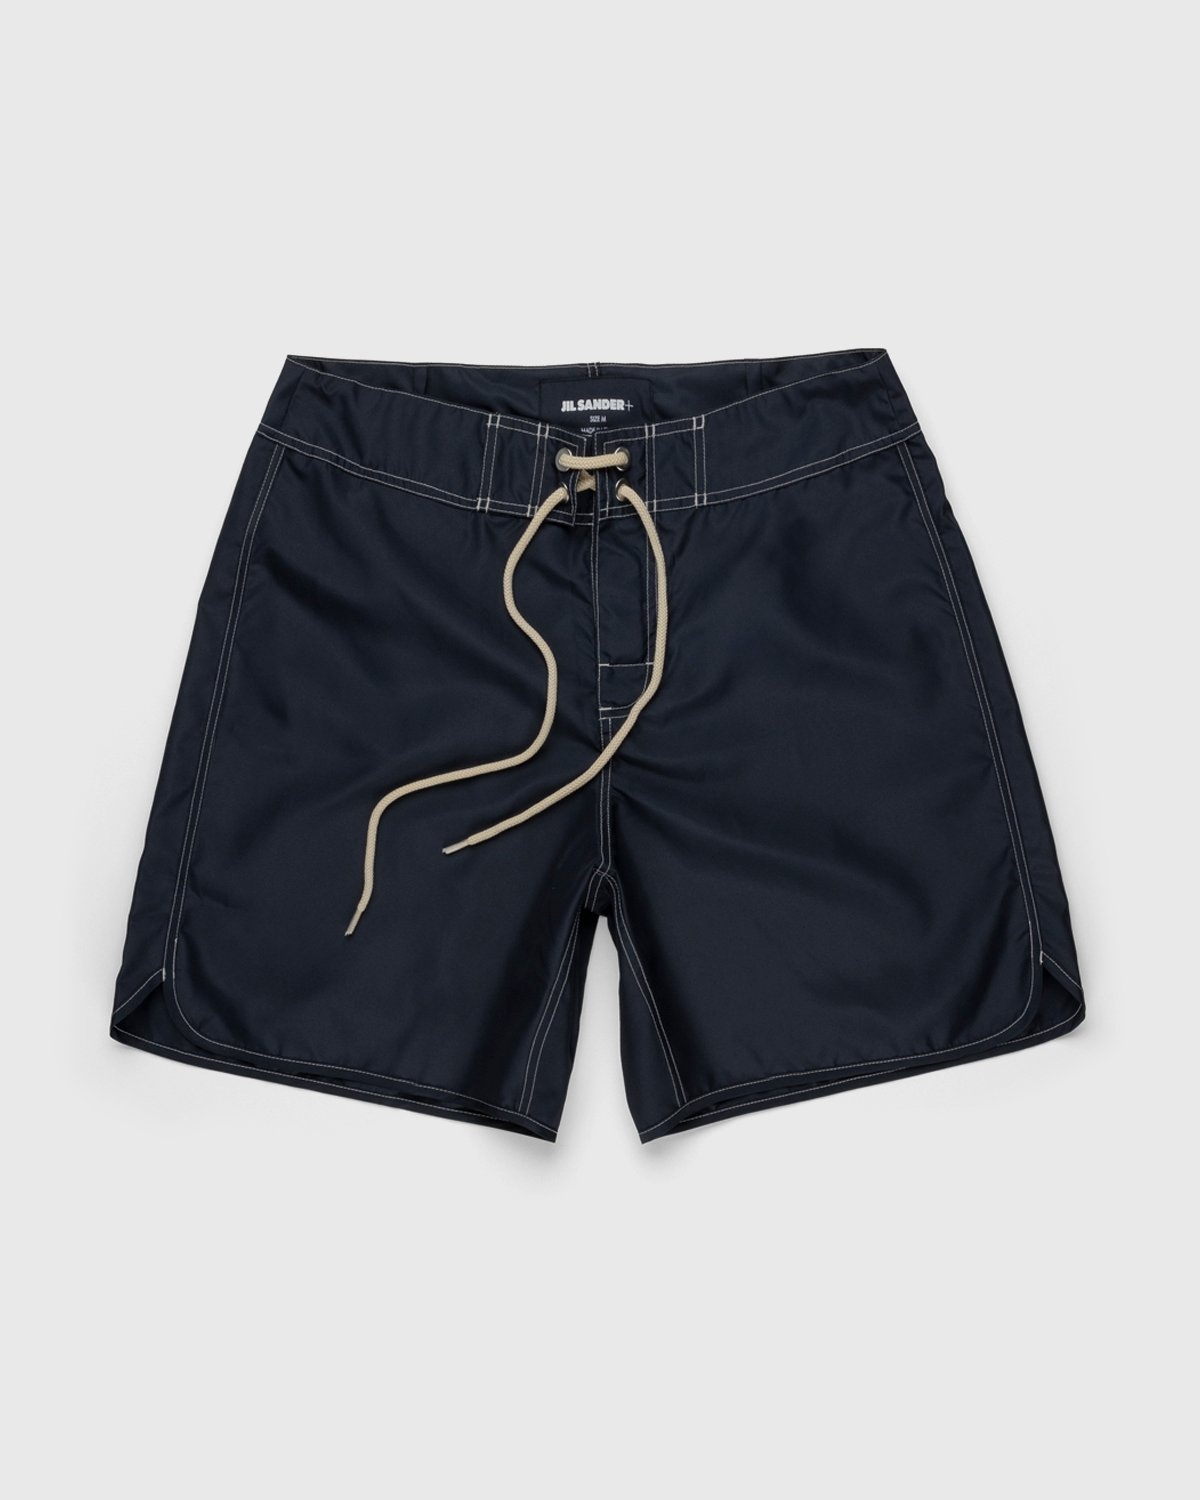 Jil Sander – Nylon Swim Shorts Black - Swim Shorts - Black - Image 1